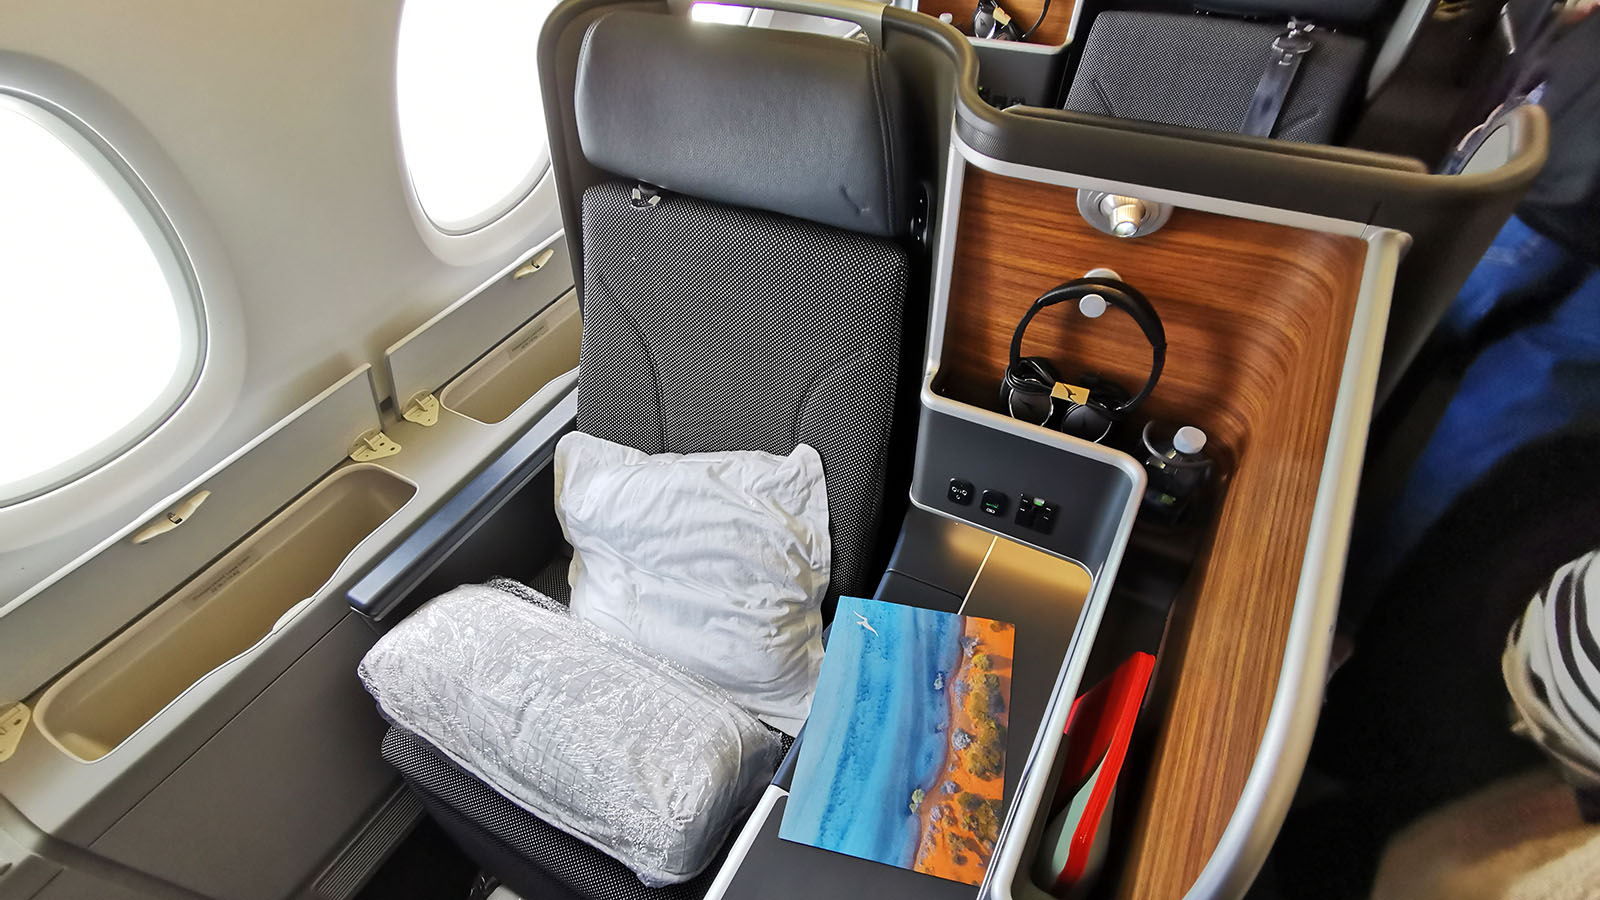 Qantas Airbus A380 Business seat